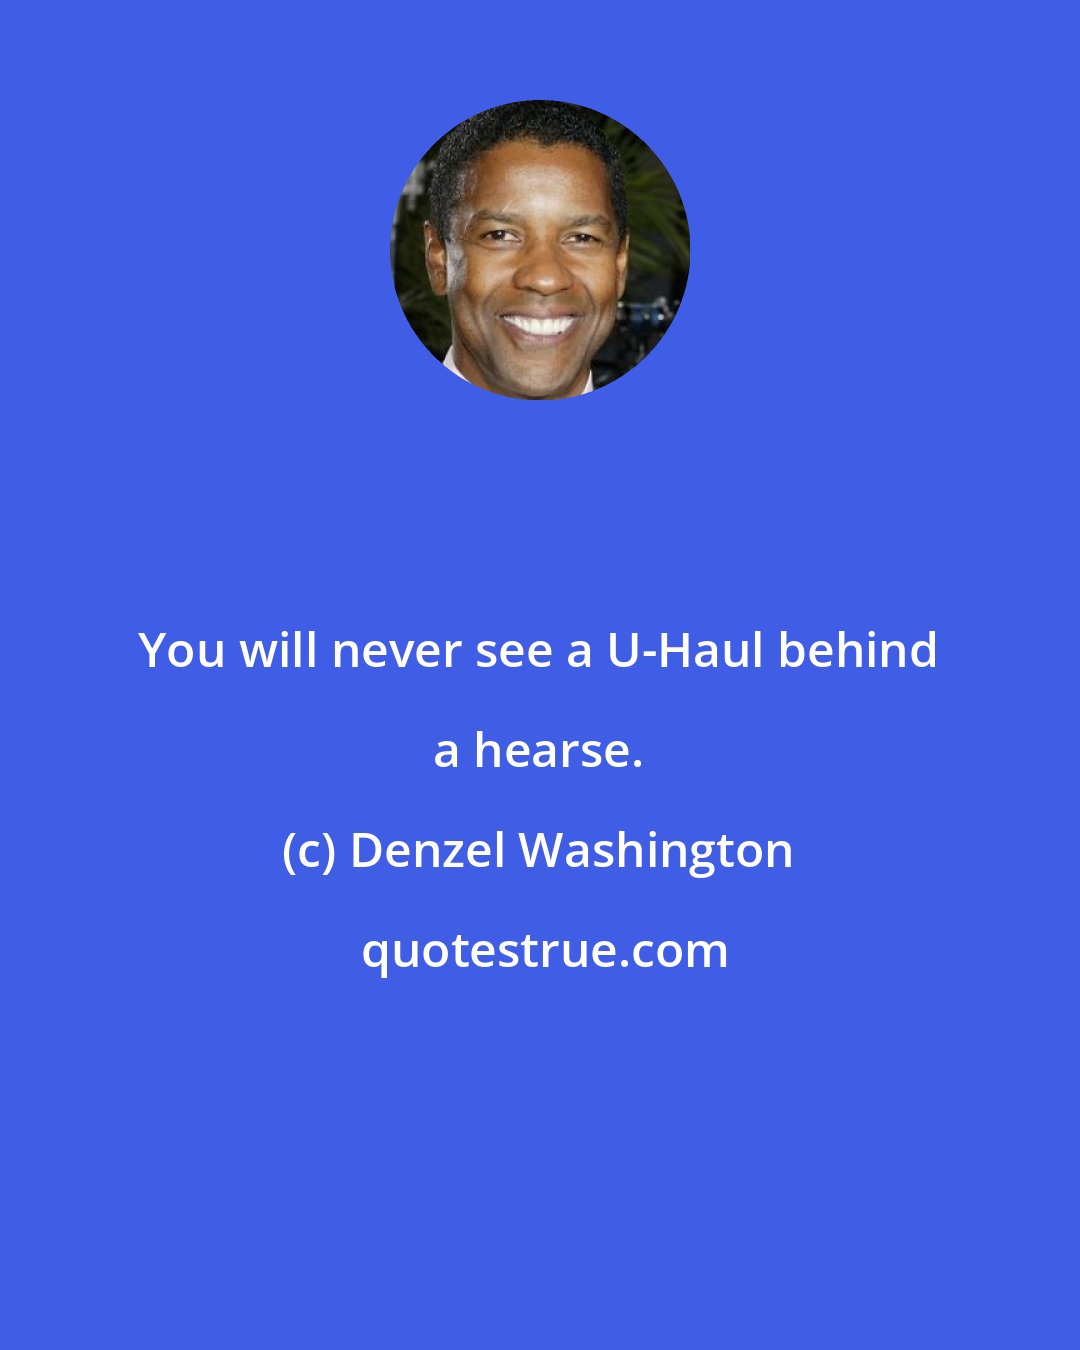 Denzel Washington: You will never see a U-Haul behind a hearse.